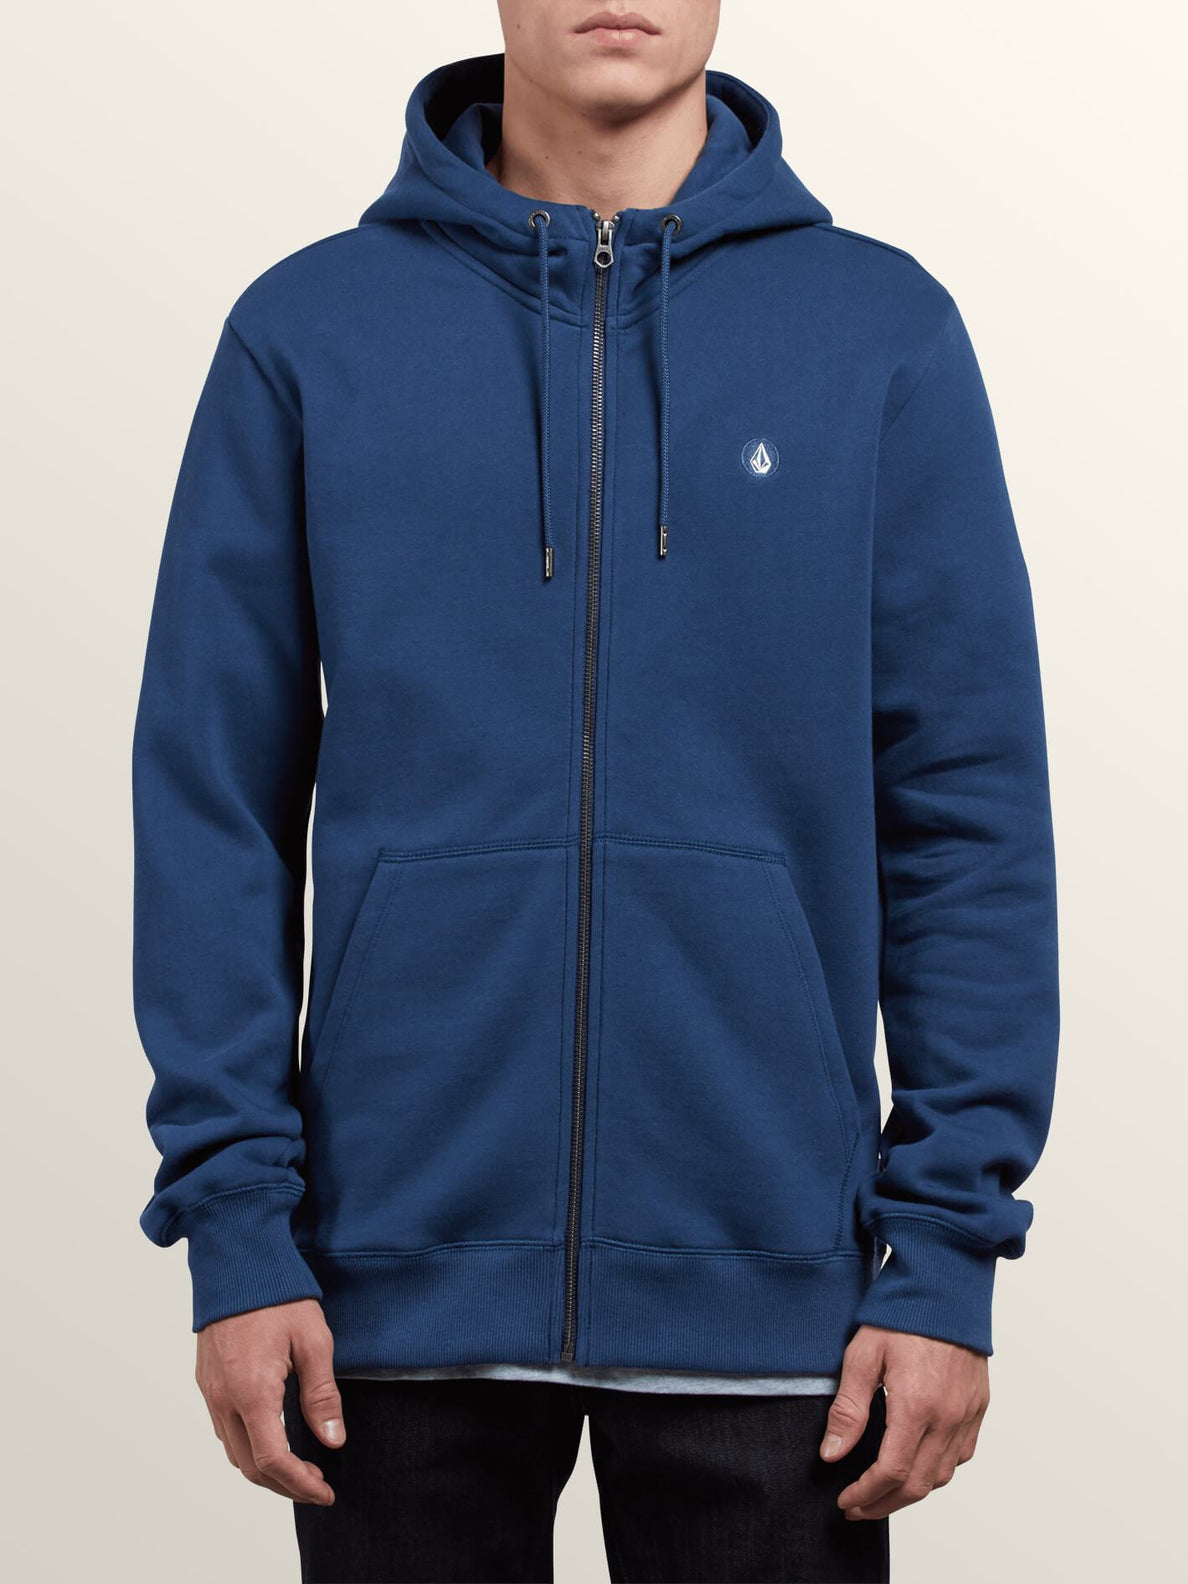 volcom blue hoodie